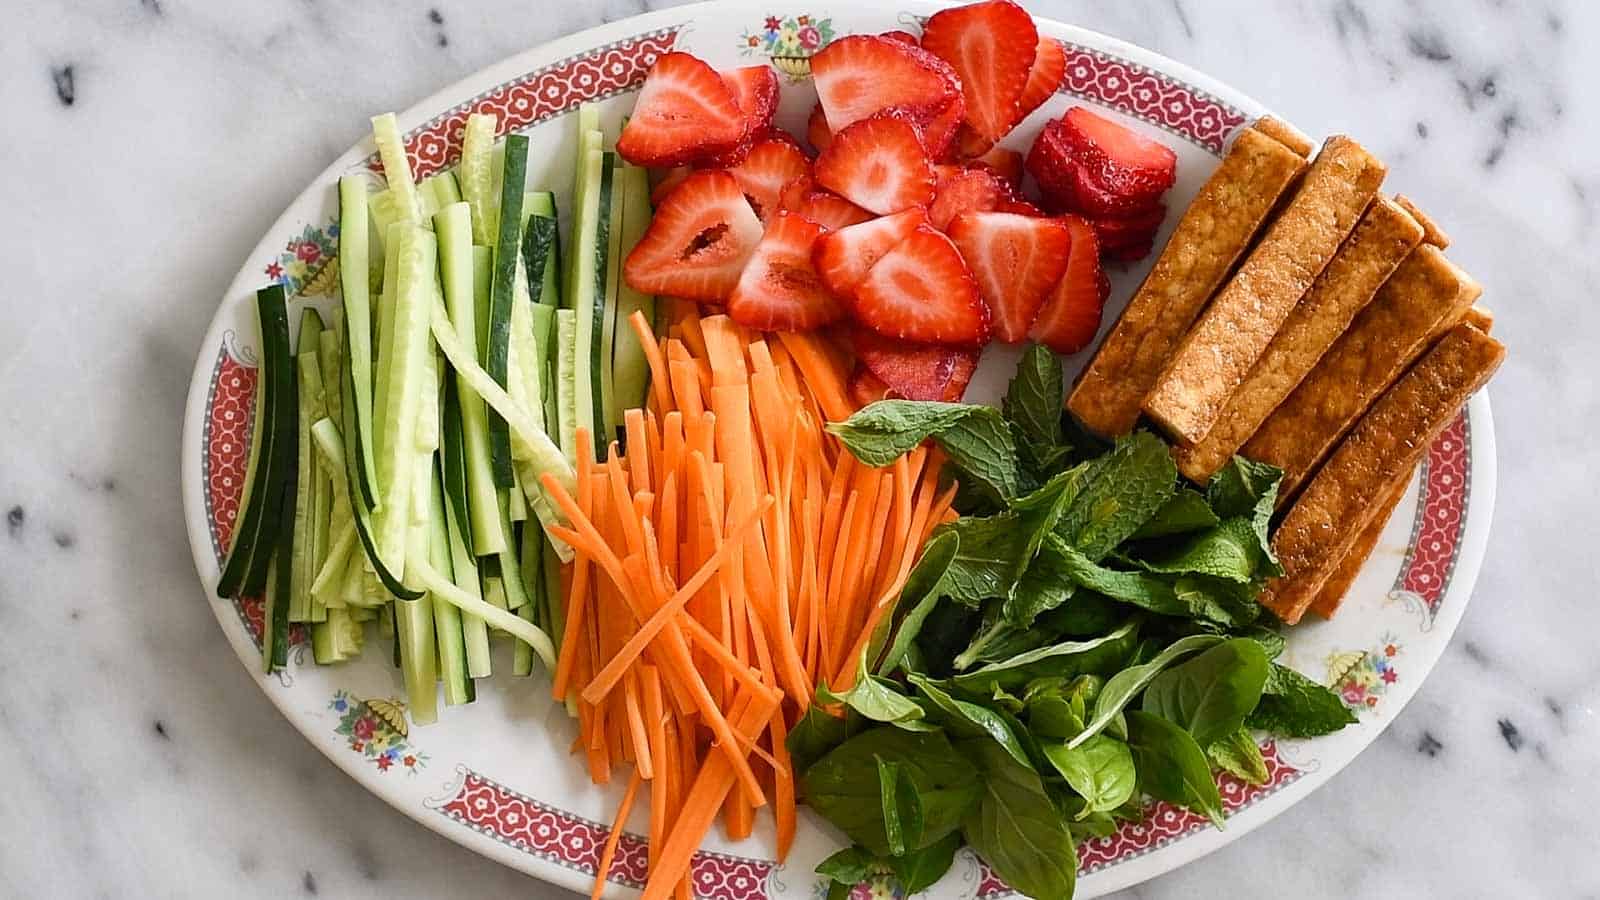 Filling for spring rolls: cucumber, carrots, strawberries, teriyaki tofu, mint, and basil